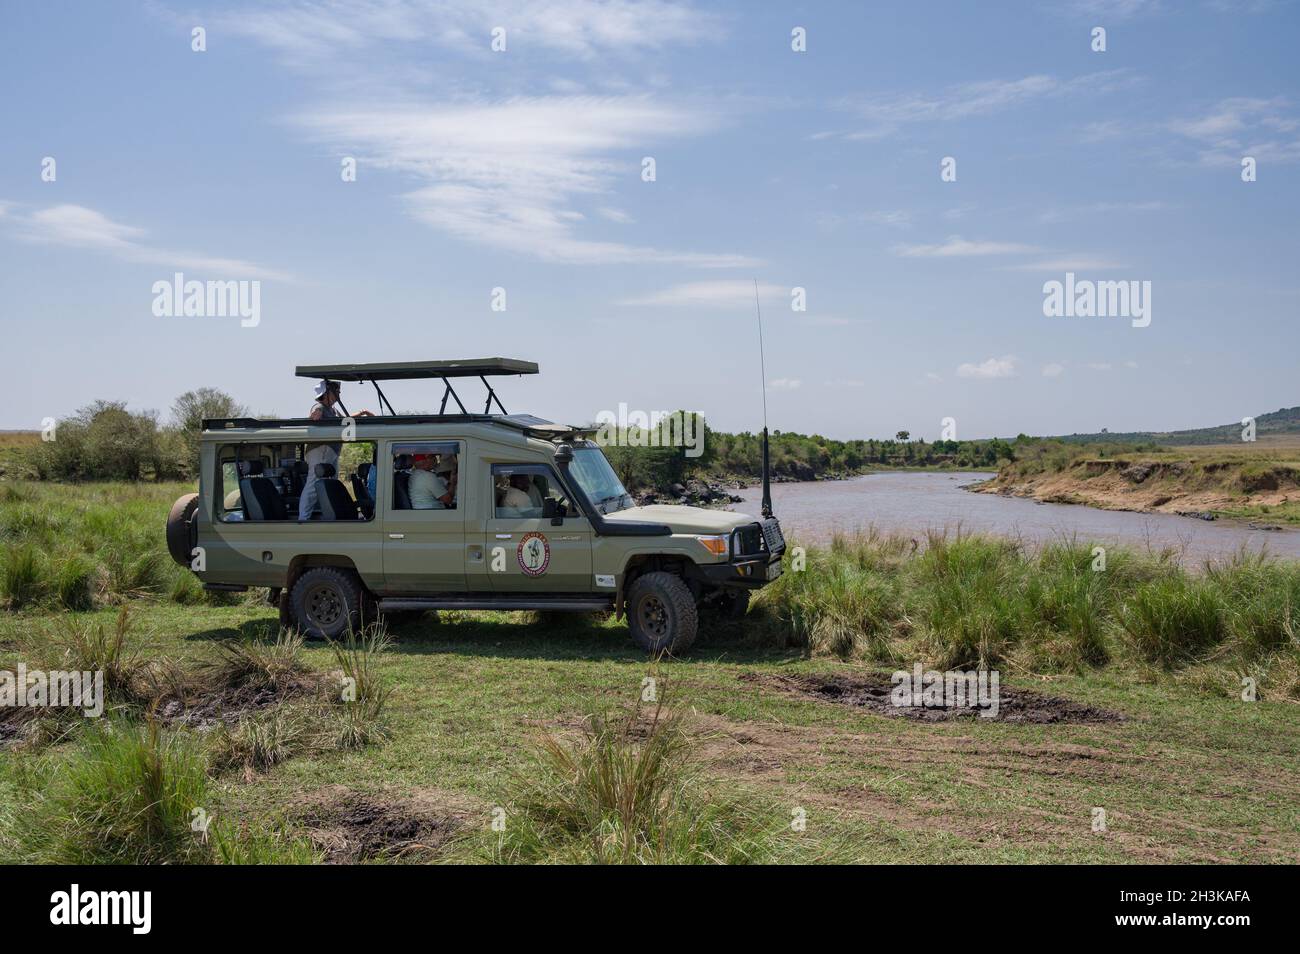 A 4x4 Toyota Landcruiser safari vehicle with tourists parked by the Mara river waiting for animals to cross, Masai Mara, Kenya Stock Photo